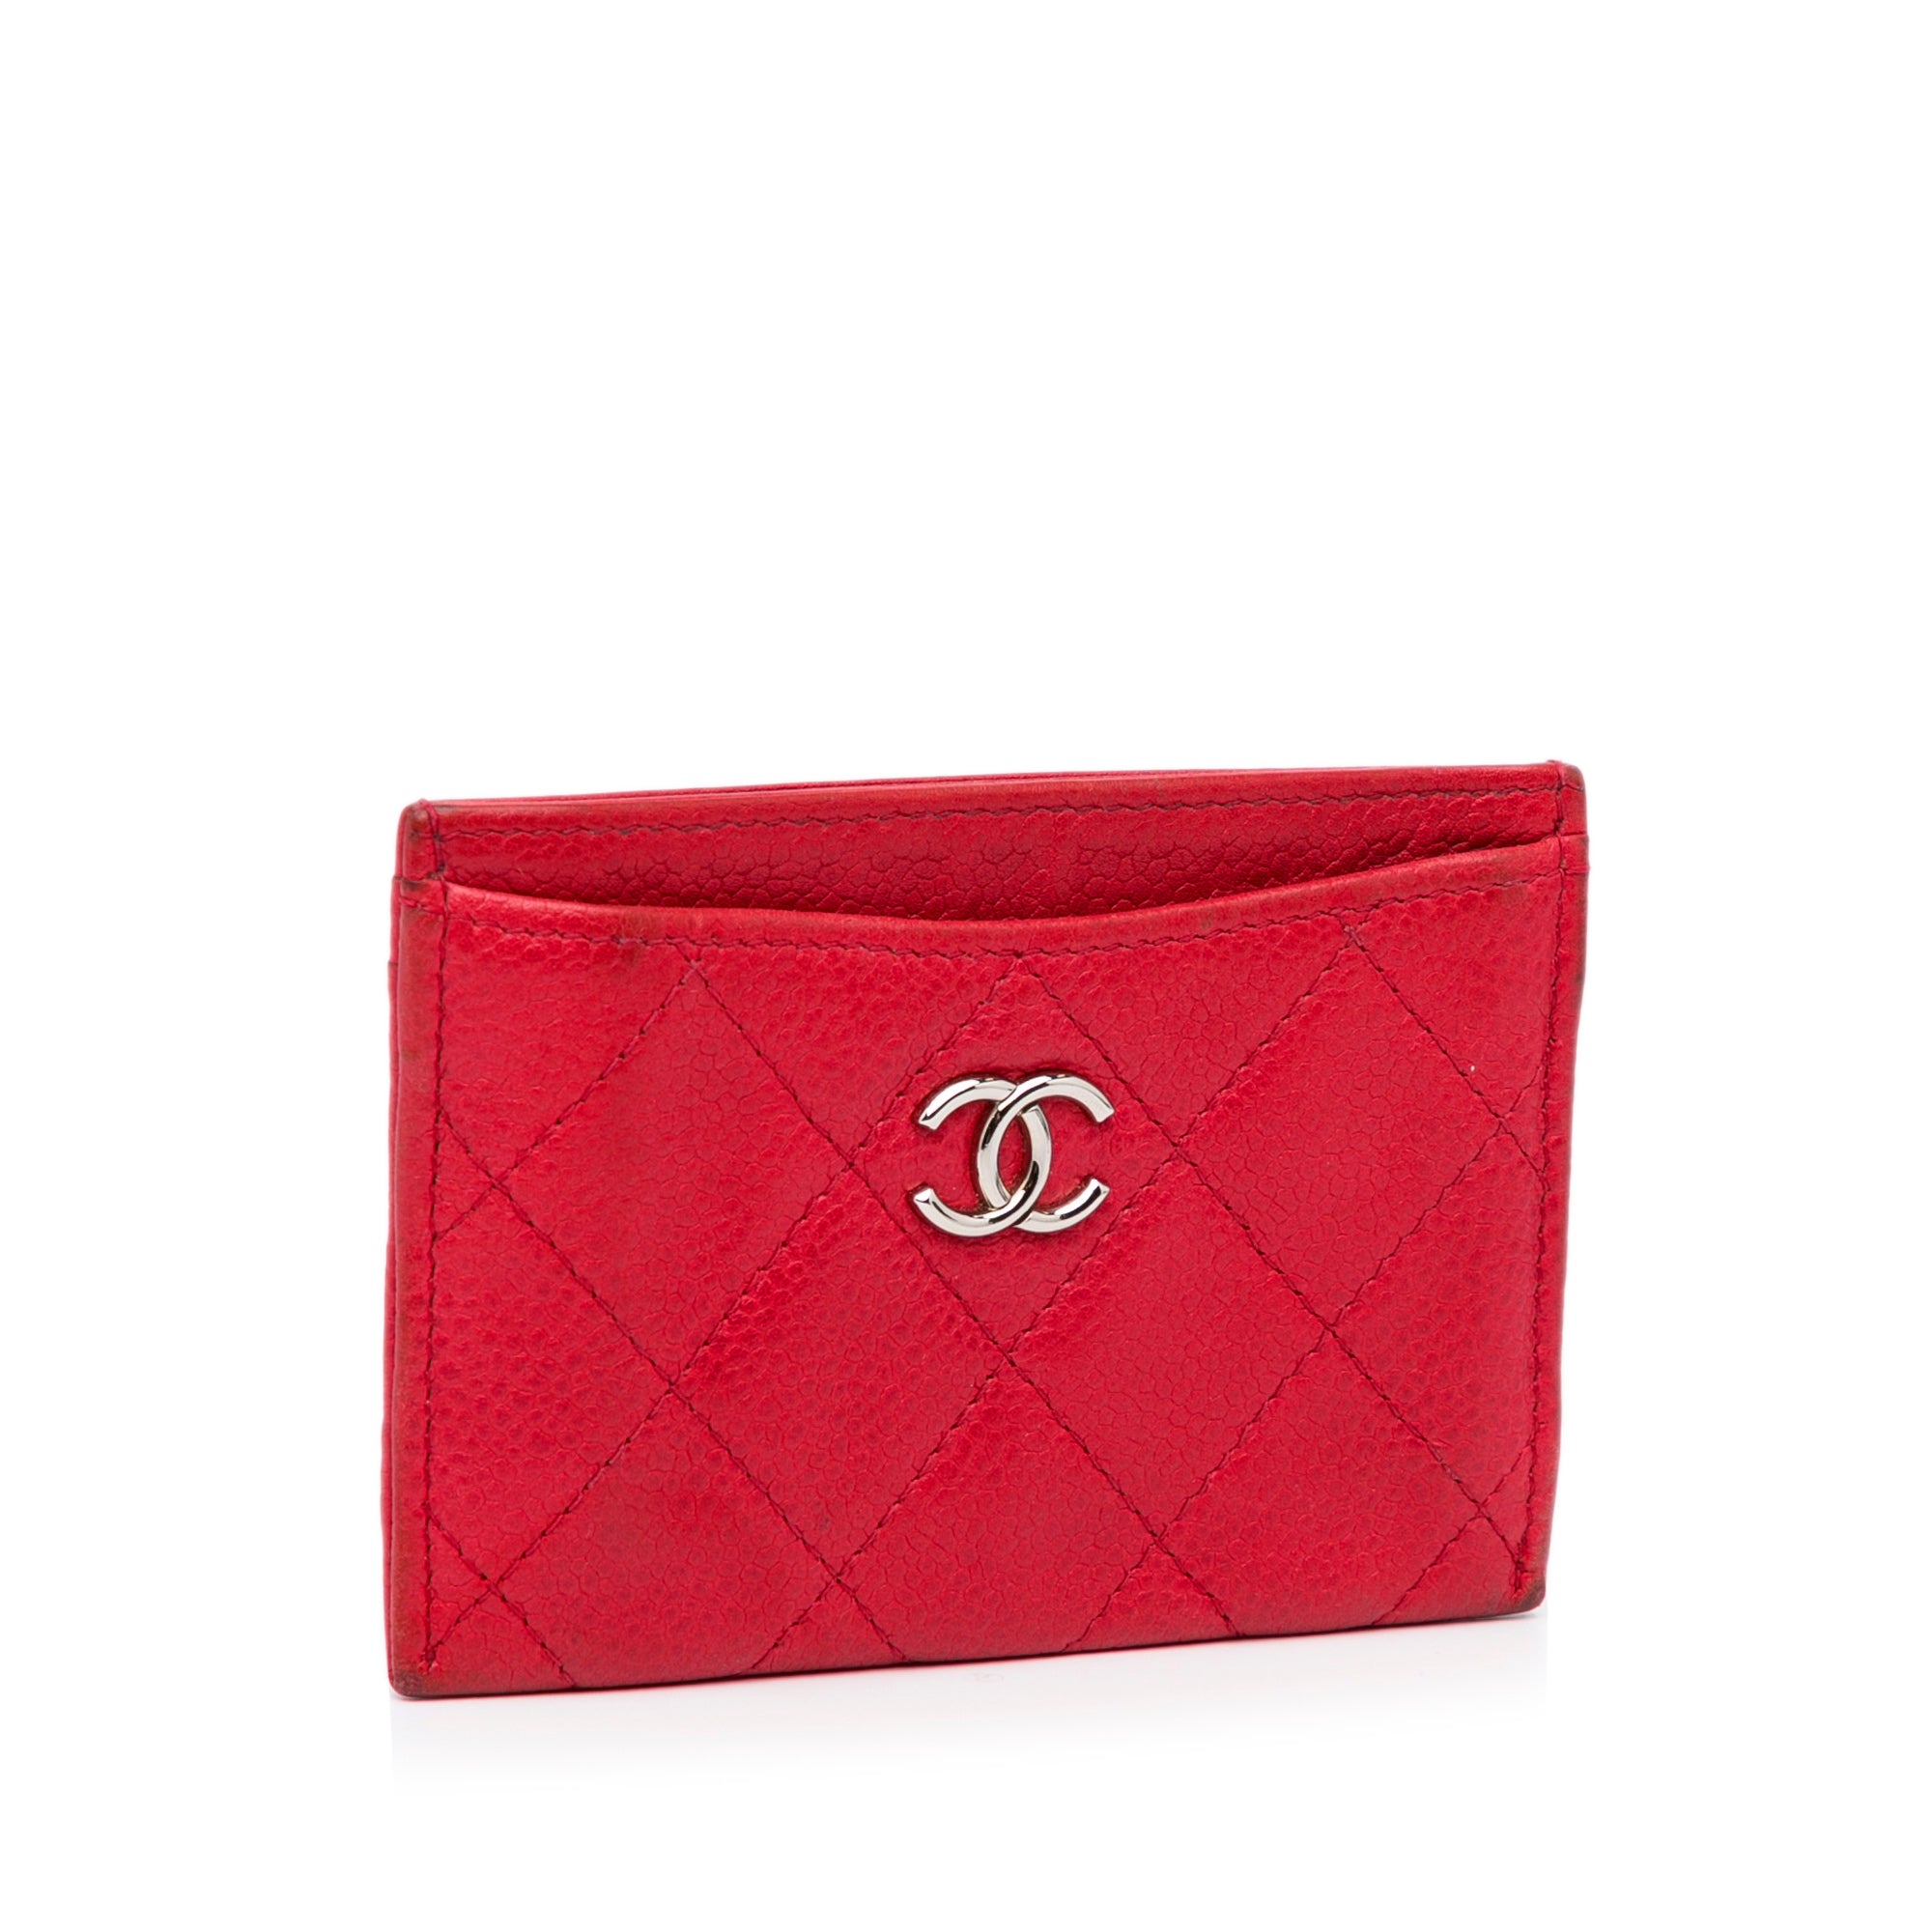 CHANEL Chanel CC Caviar Card Holder Red - Vault 55